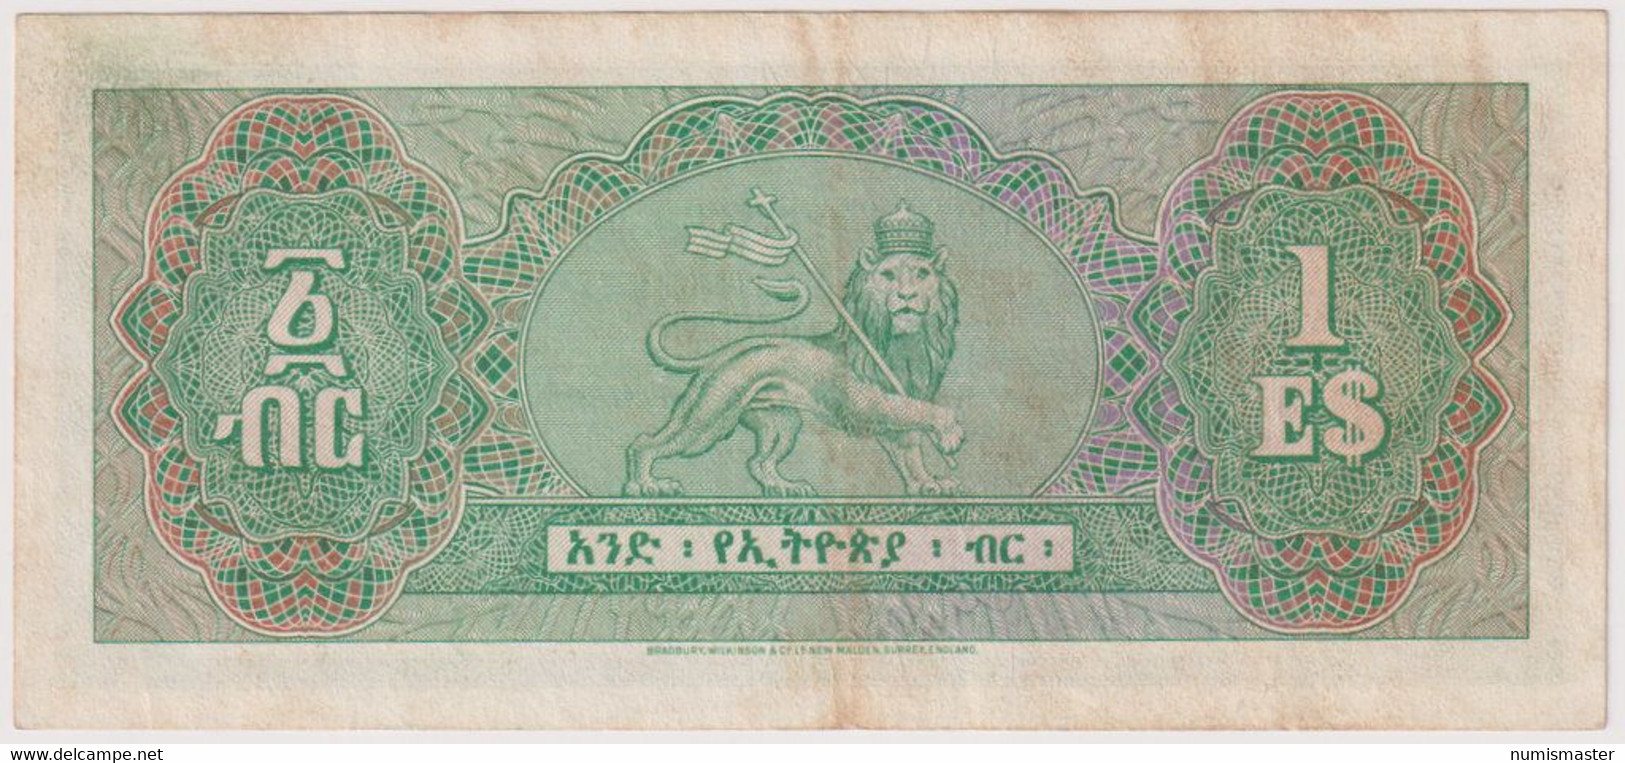 ETHIOPIA 1 DOLLAR ND (1961) P-18 - Etiopía